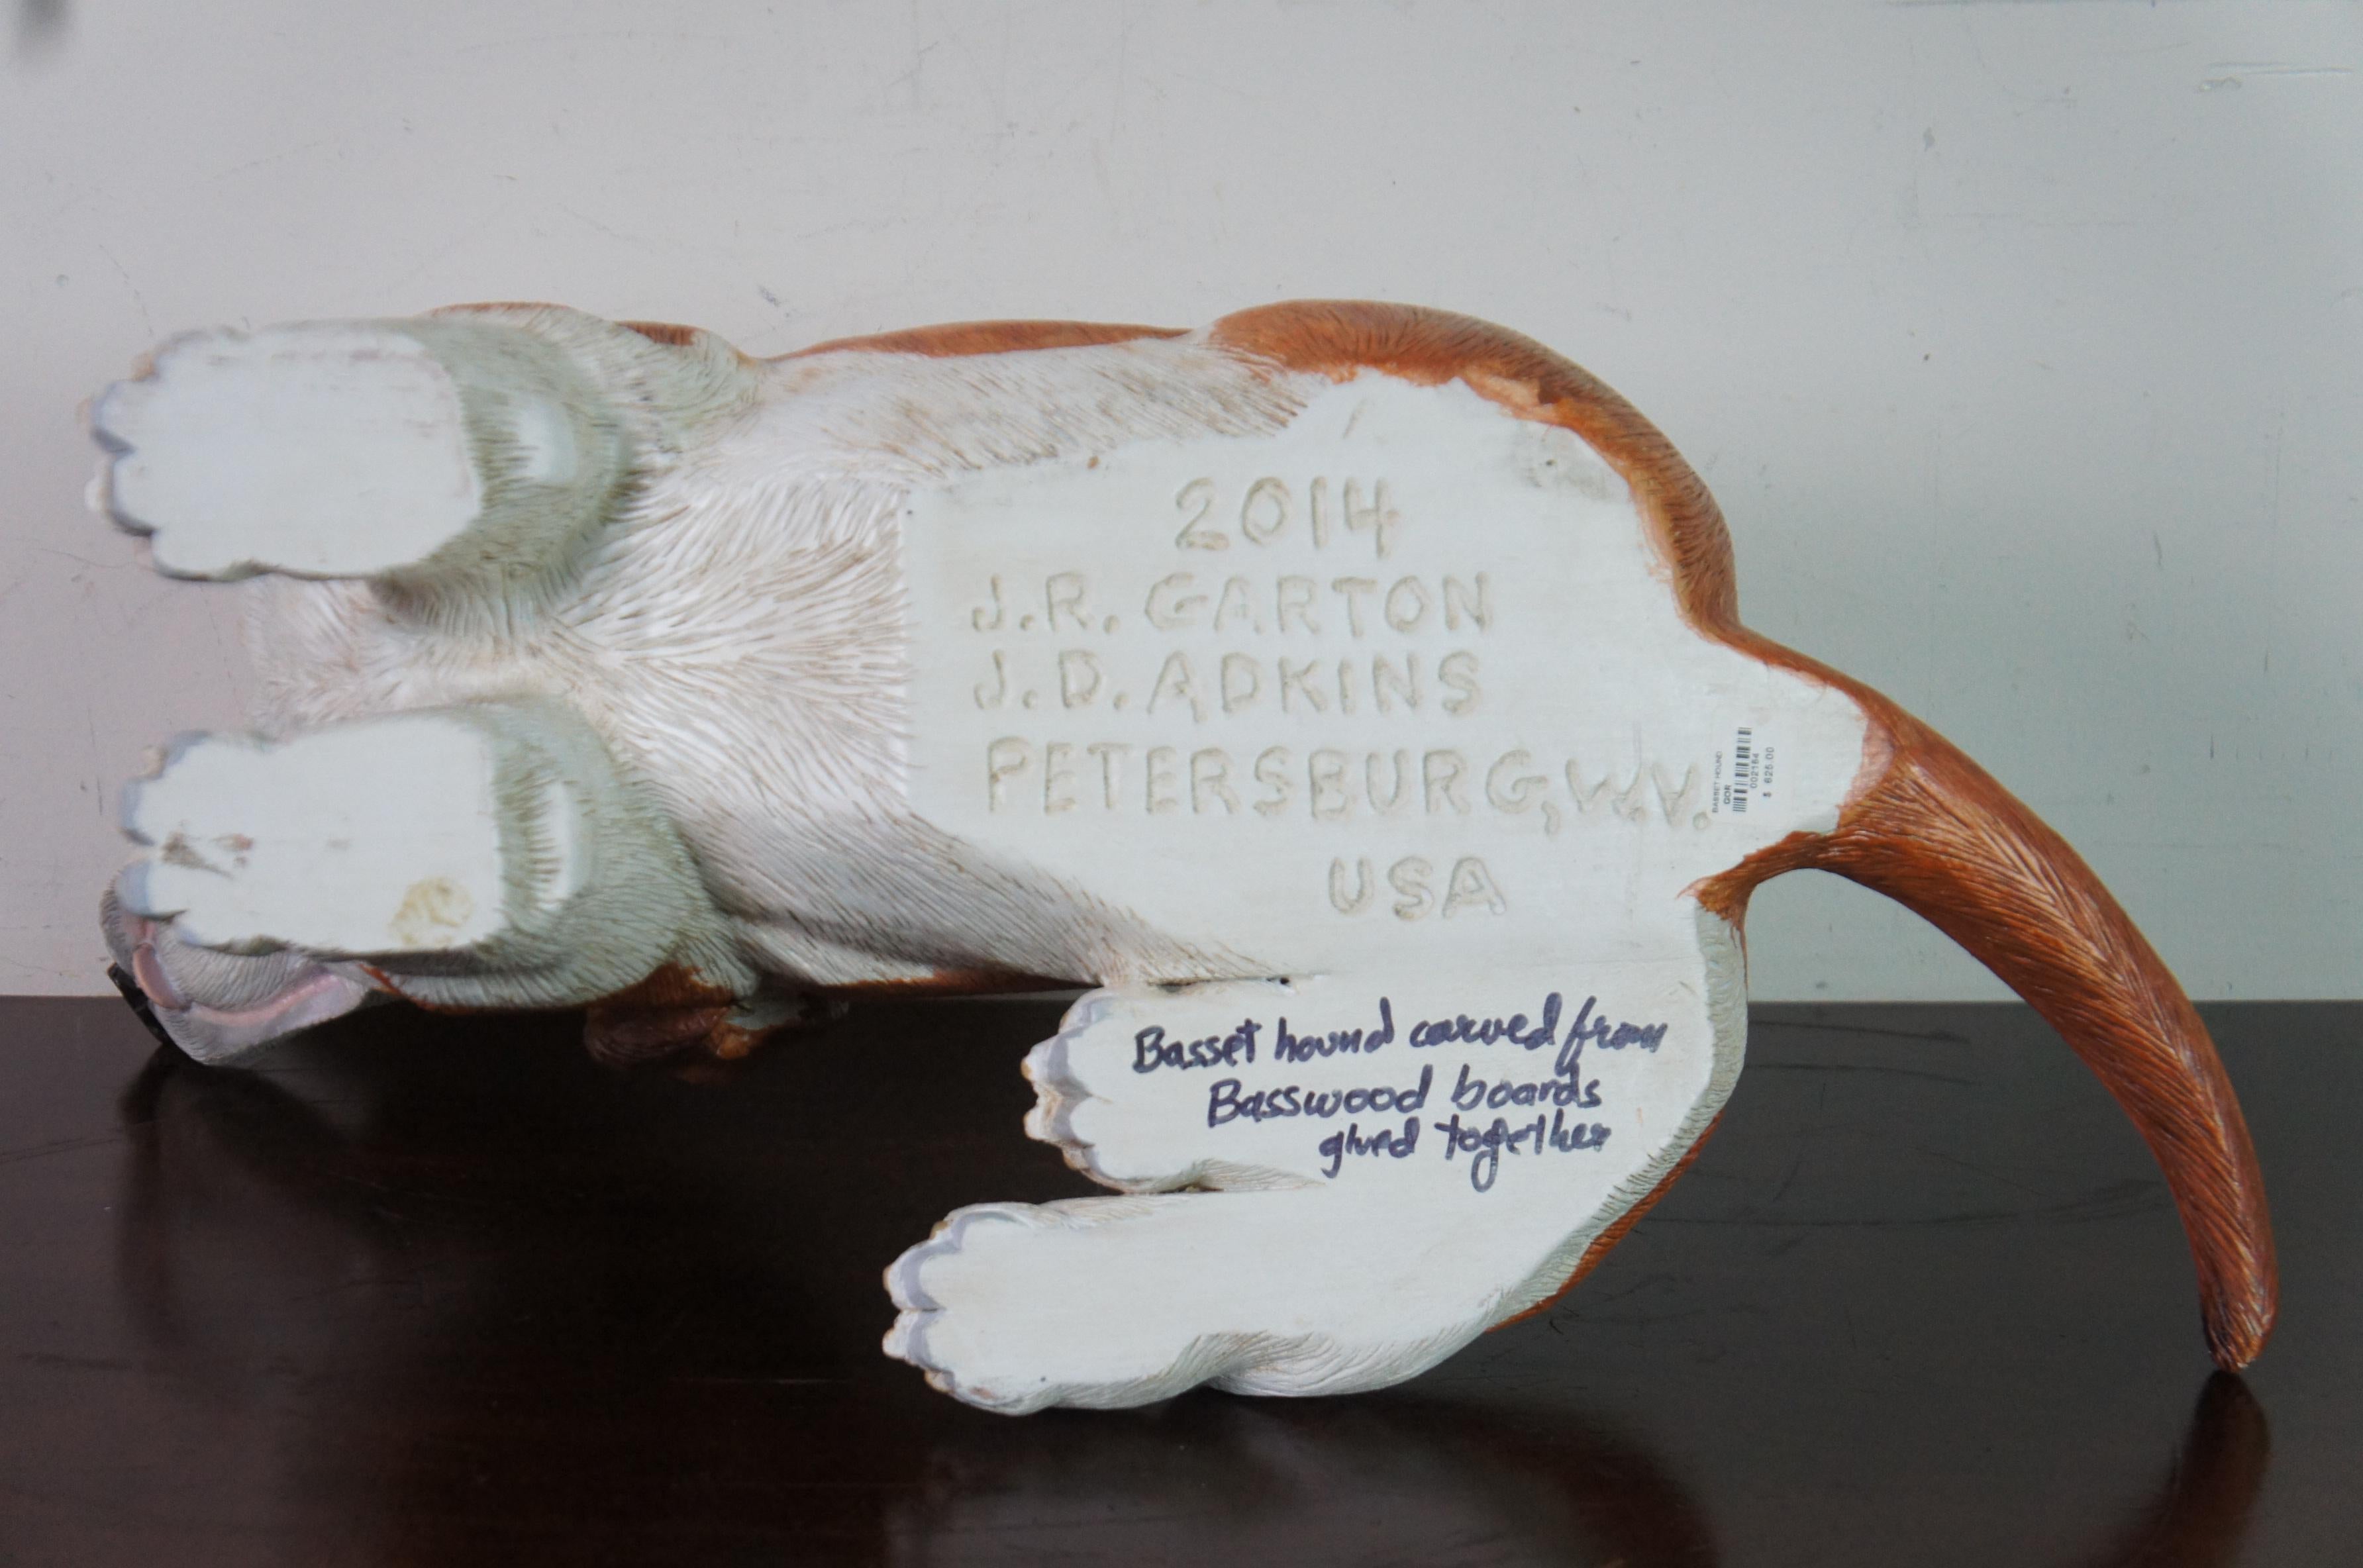 20th Century Carved Basswood Basset Hound Dog Sculpture Statue John Garton JD Adkins For Sale